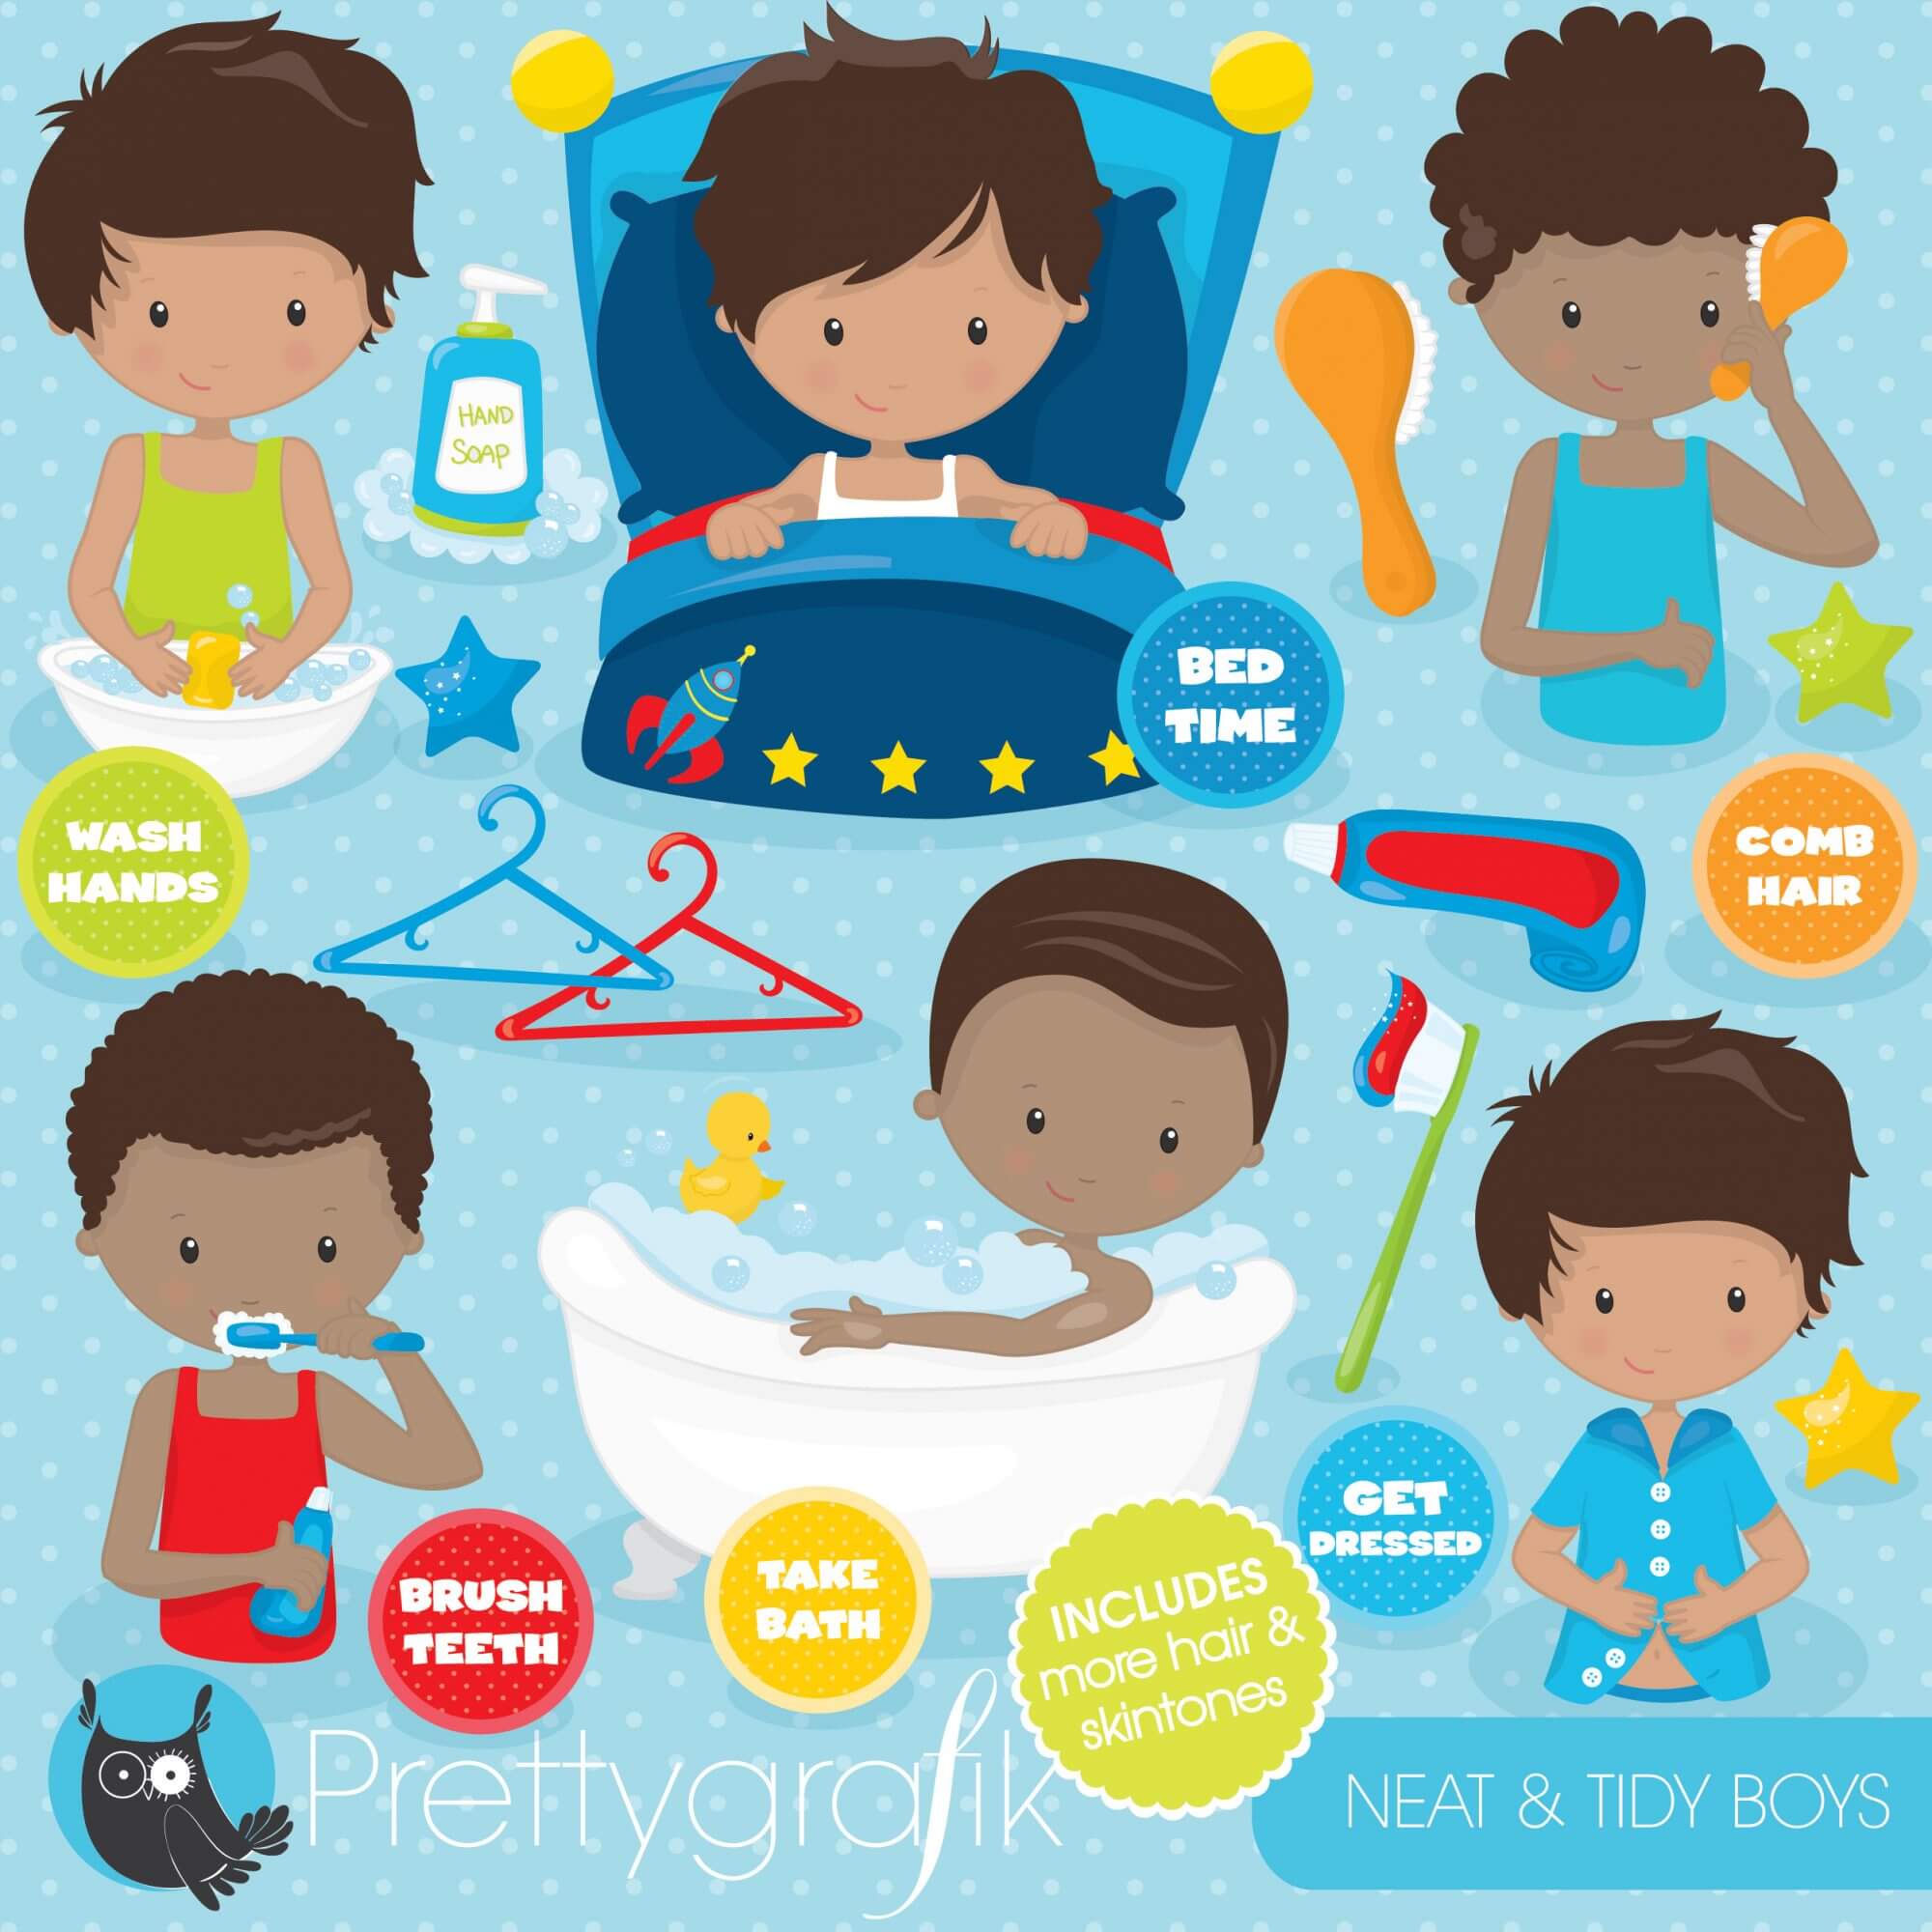 Child Hygiene Chart